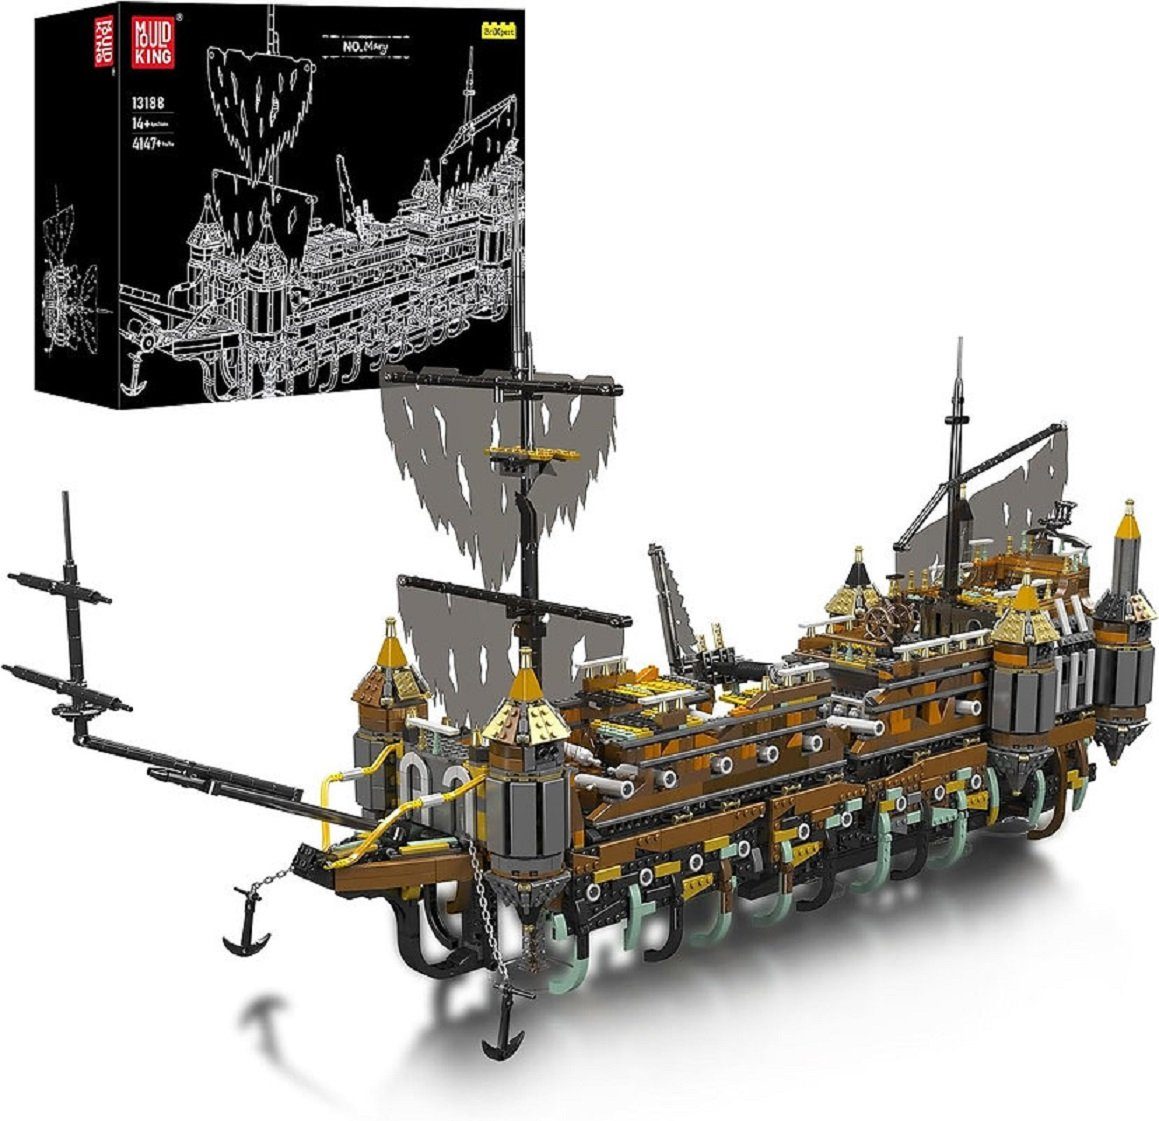 Mould King Konstruktionsspielsteine Mould King 13188 Silent Mary 4.147 Teile Piratenschiff, (4147 St)